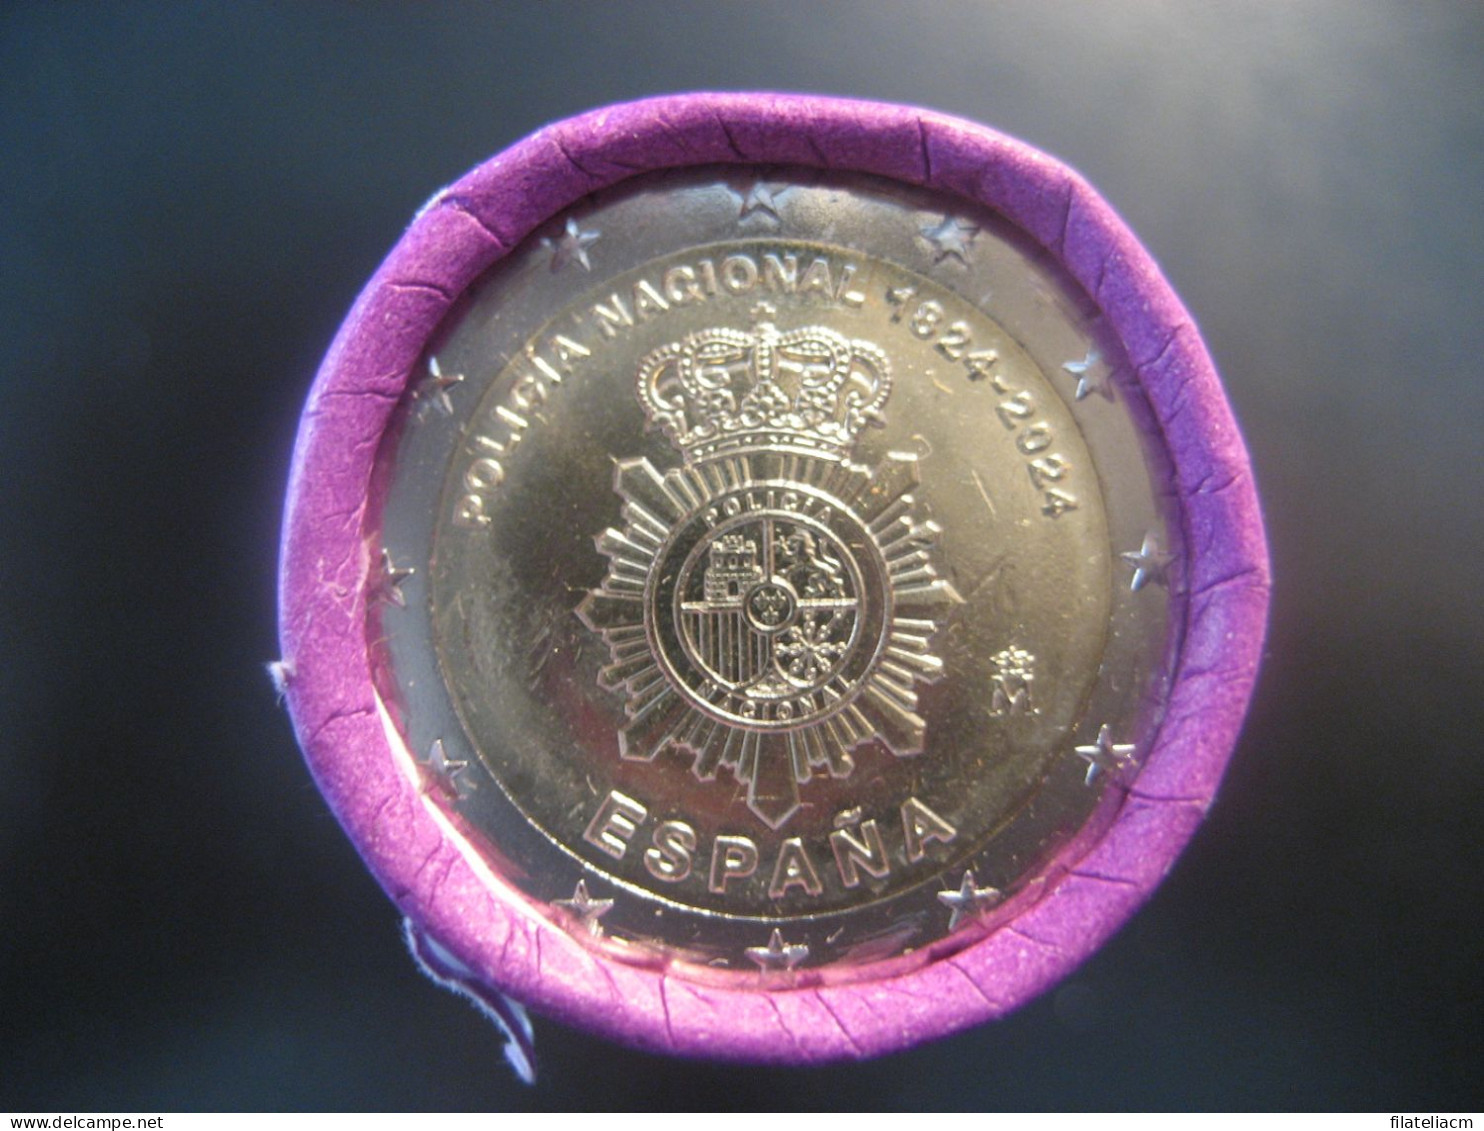 2 EUR 2024 SPAIN Policia Nacional POLICE Uncirculated From Cartridge Euro Coin - Spagna